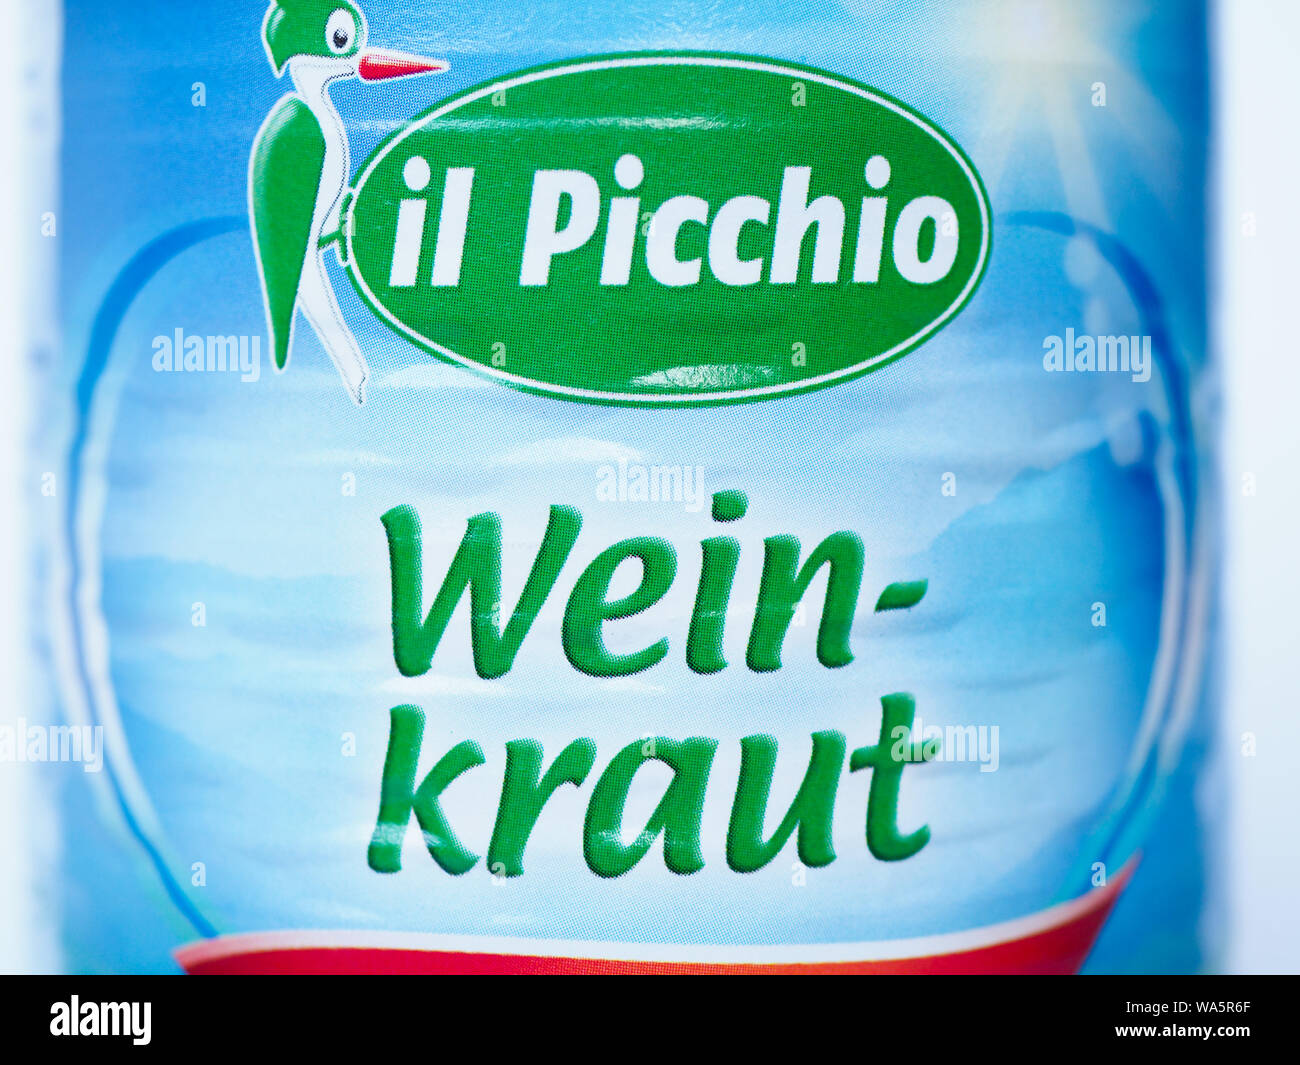 MILAN, ITALY - CIRCA AUGUST 2019: Il Picchio wein-kraut (wine krauts) Stock Photo